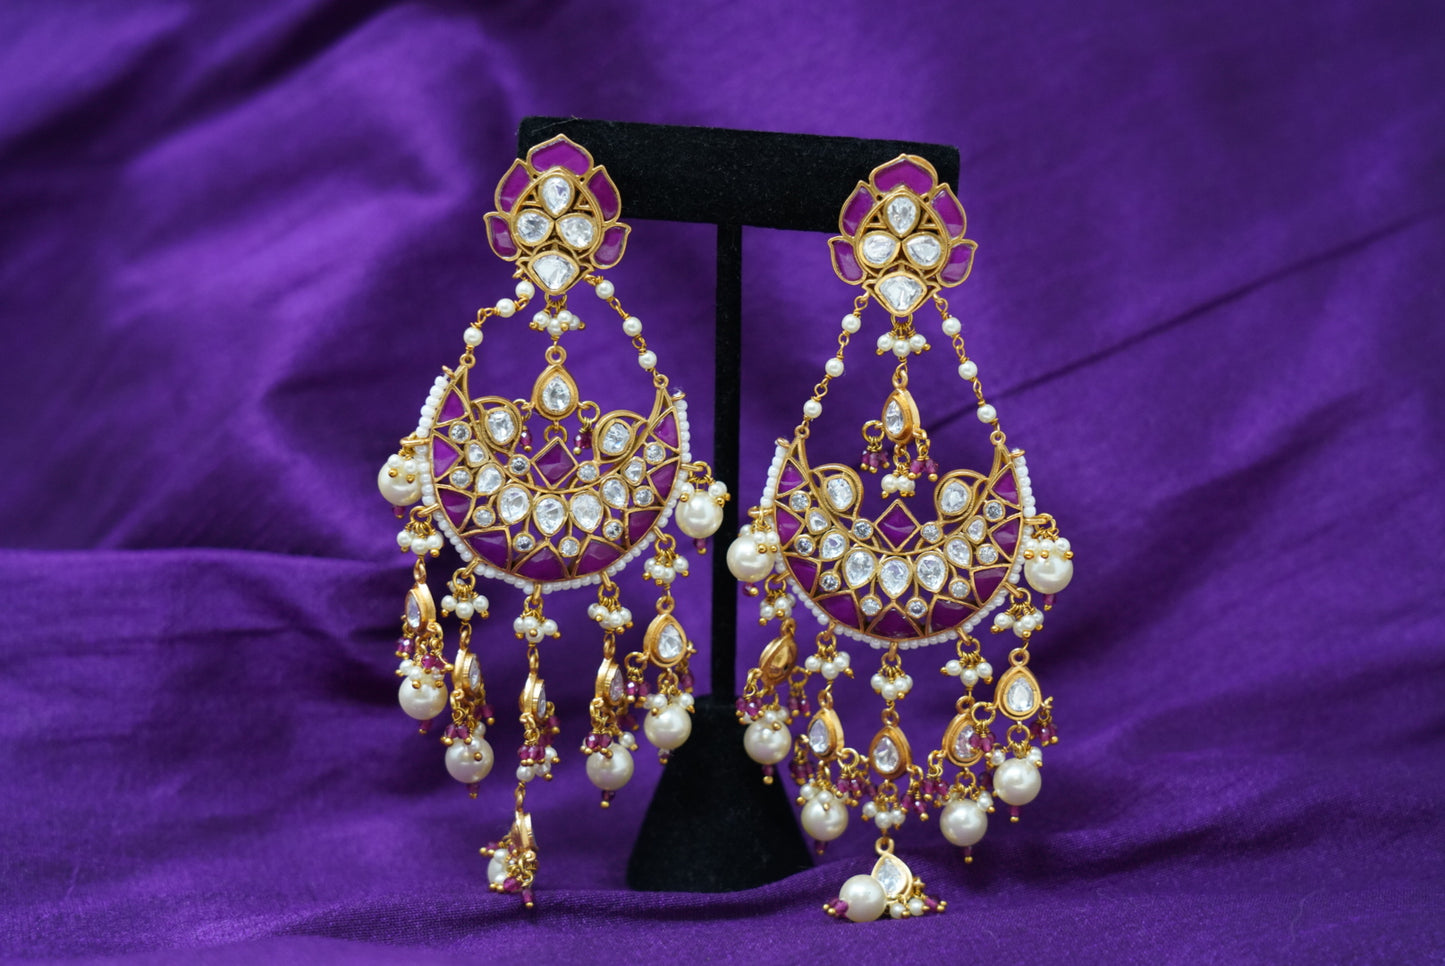 Pink Danglers with Kundan and Pearls Earrings